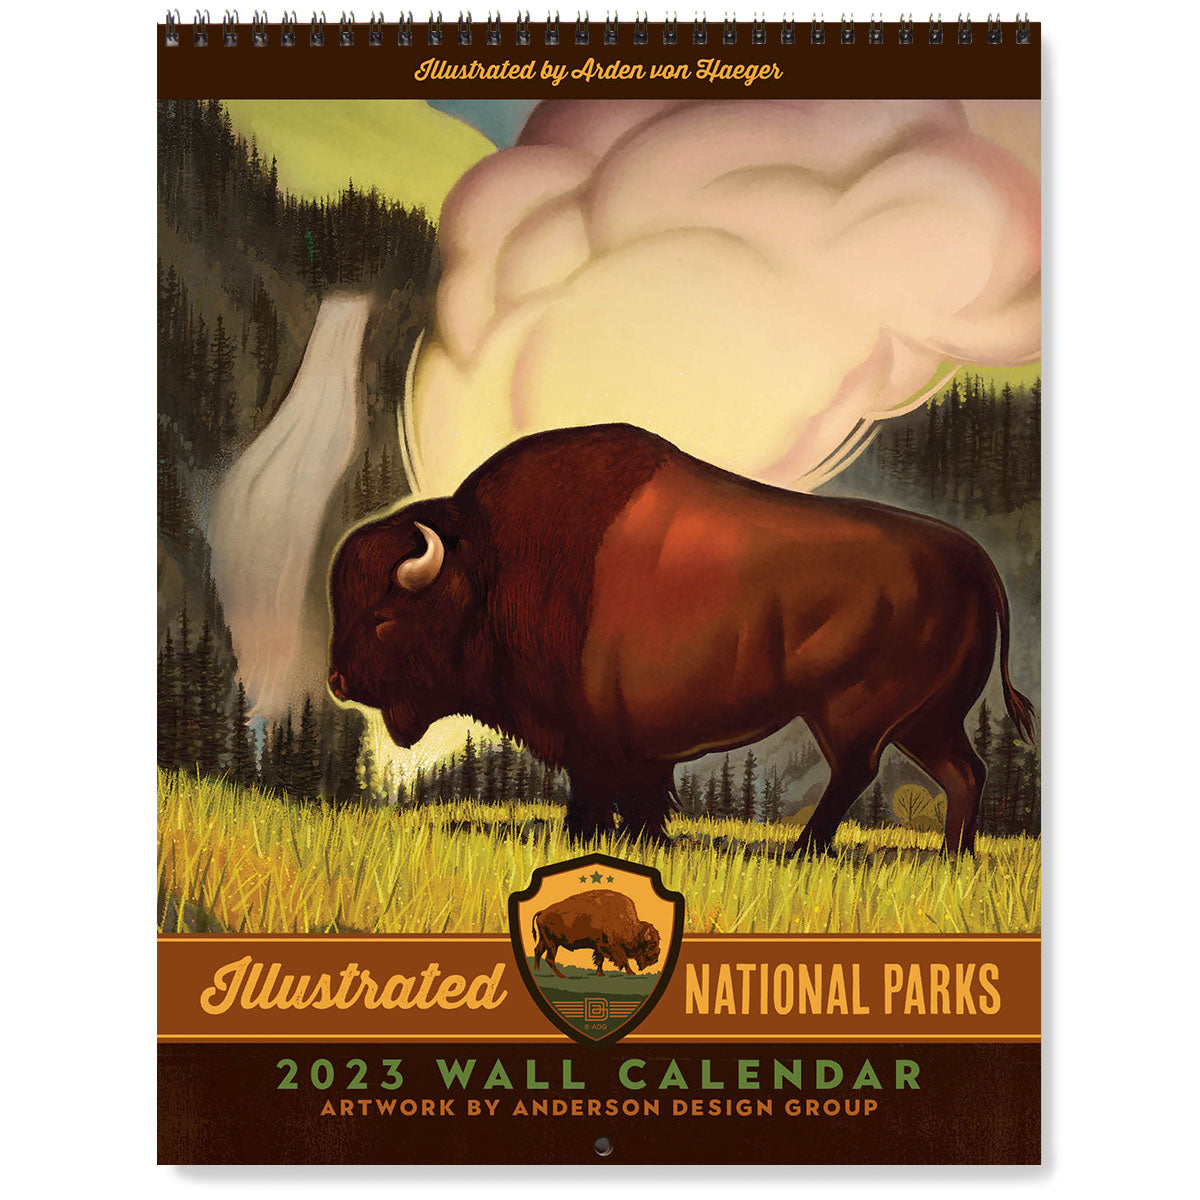 2023 Wall Calendar: National Parks by Arden von Haeger